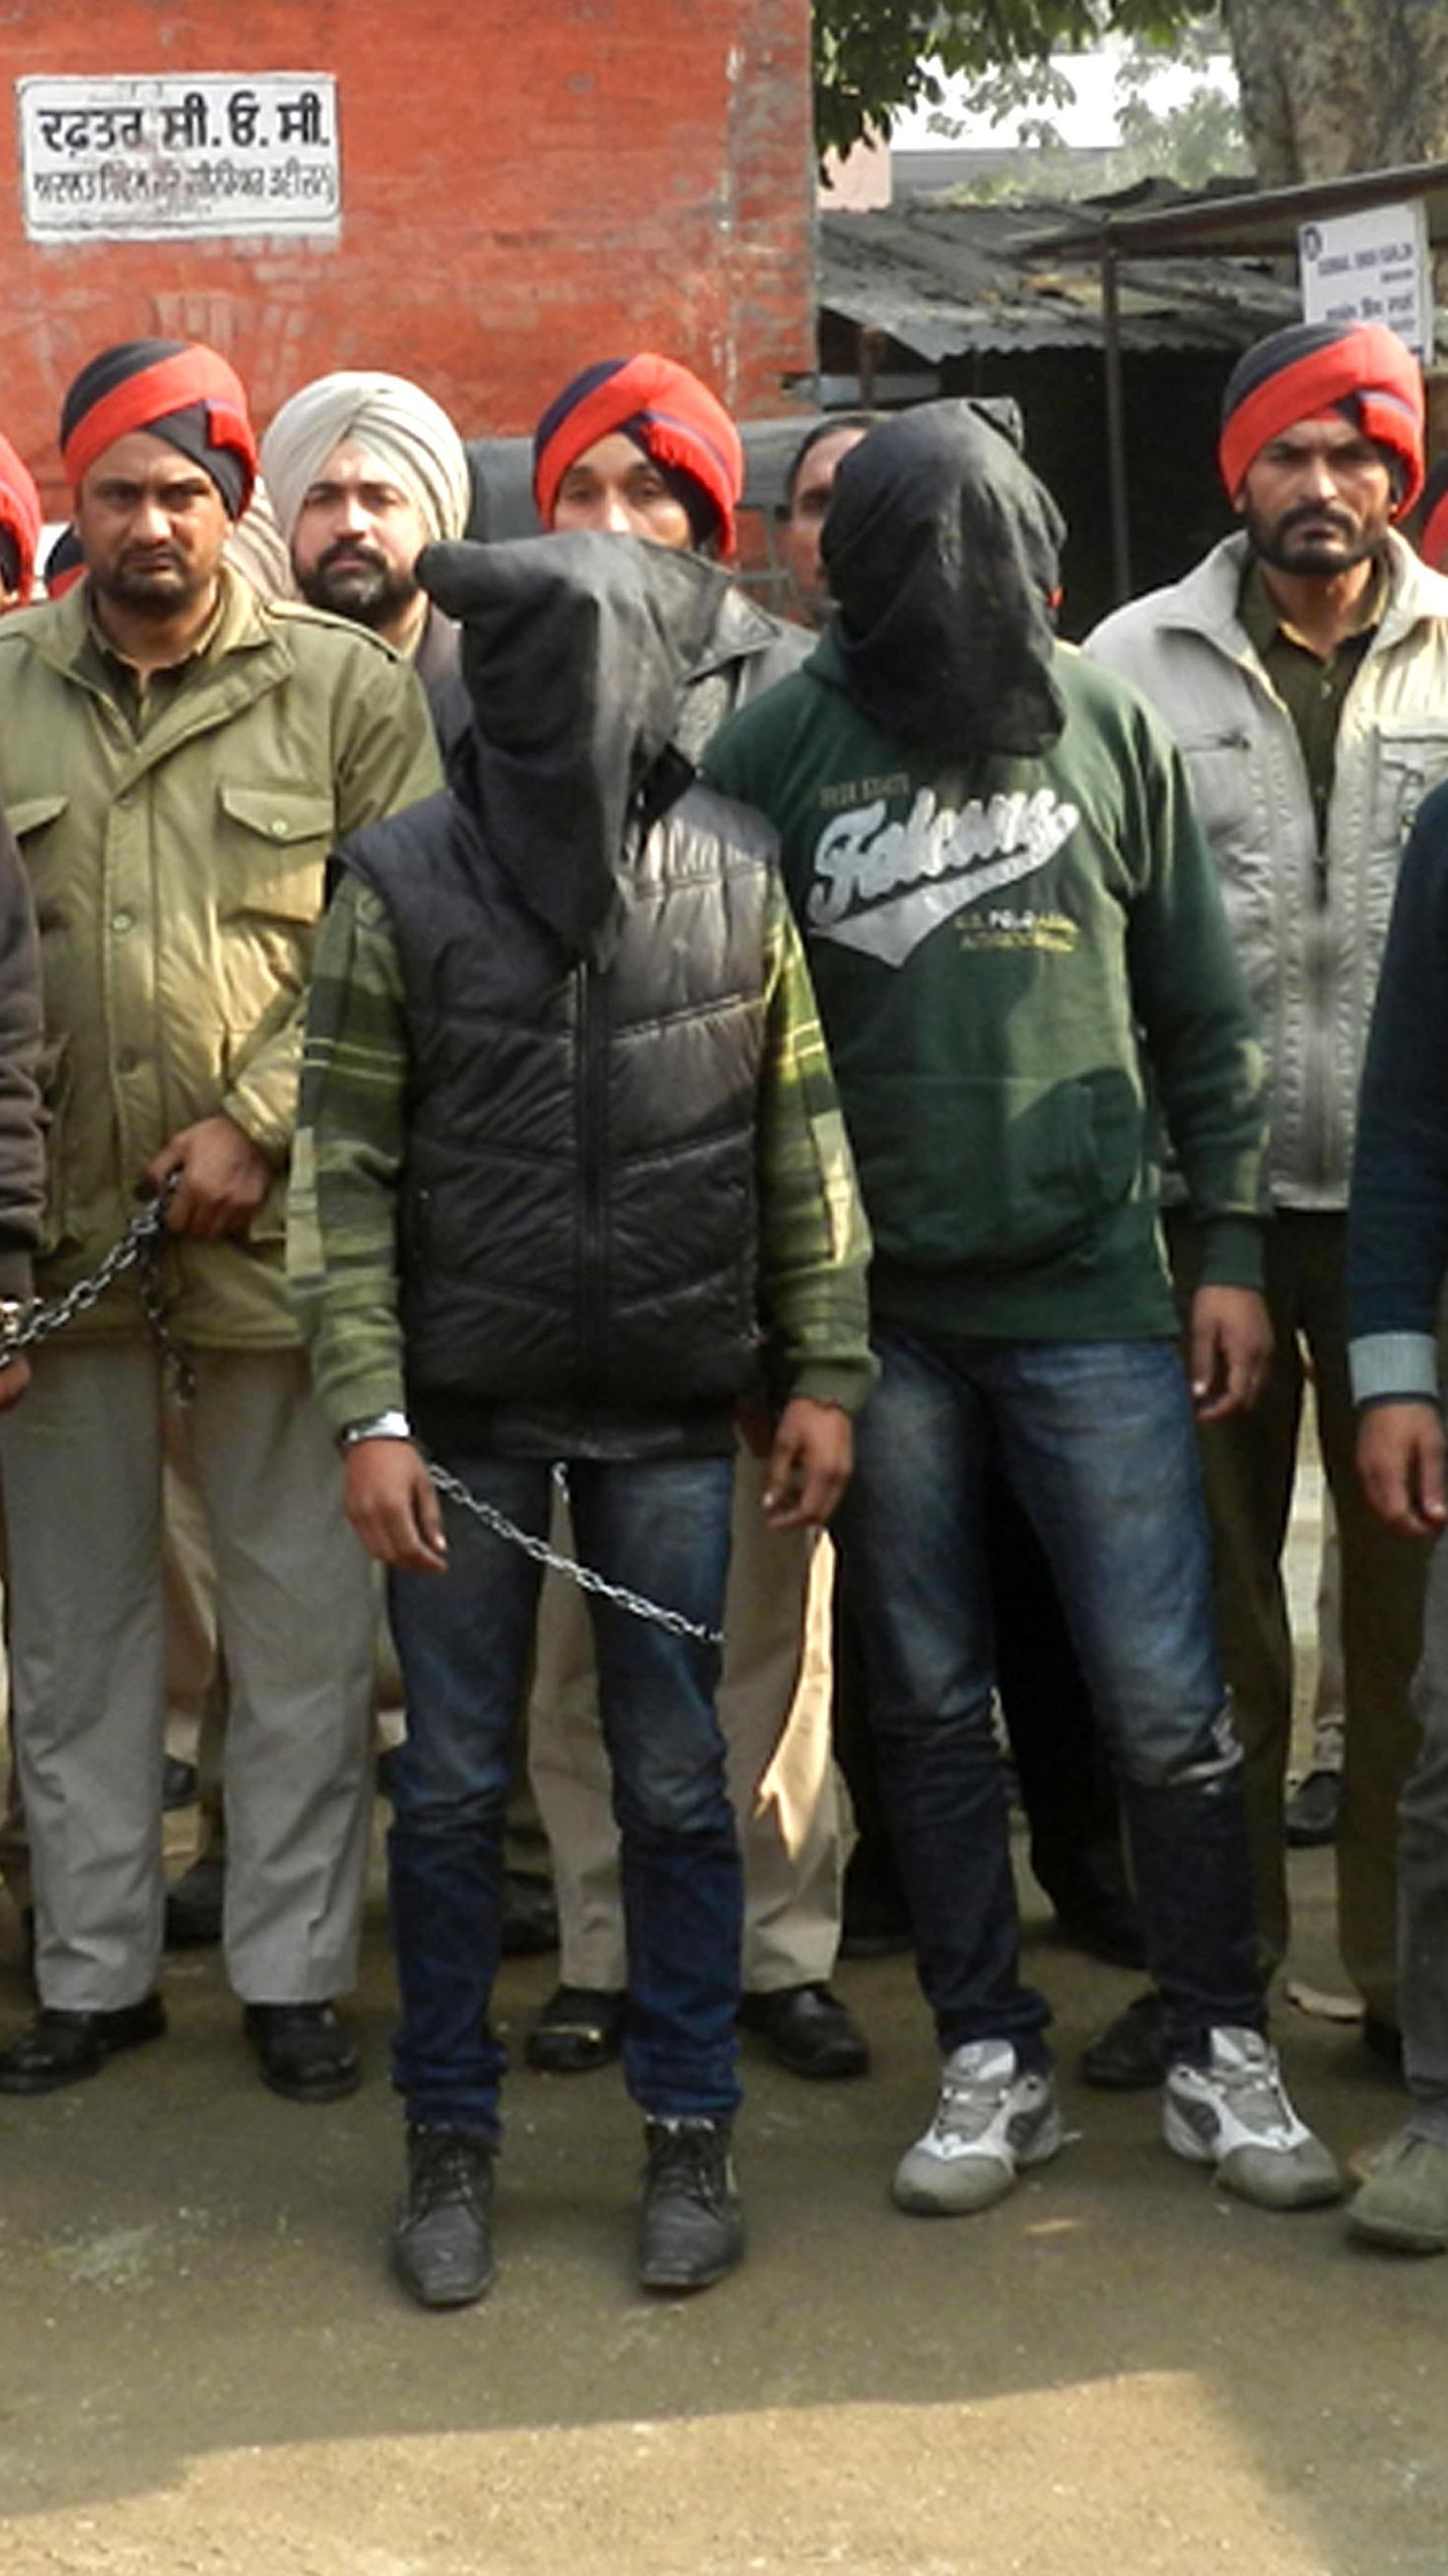 Sex Gang Real Reap - Police: 7 men gang rape bus passenger in India | CNN